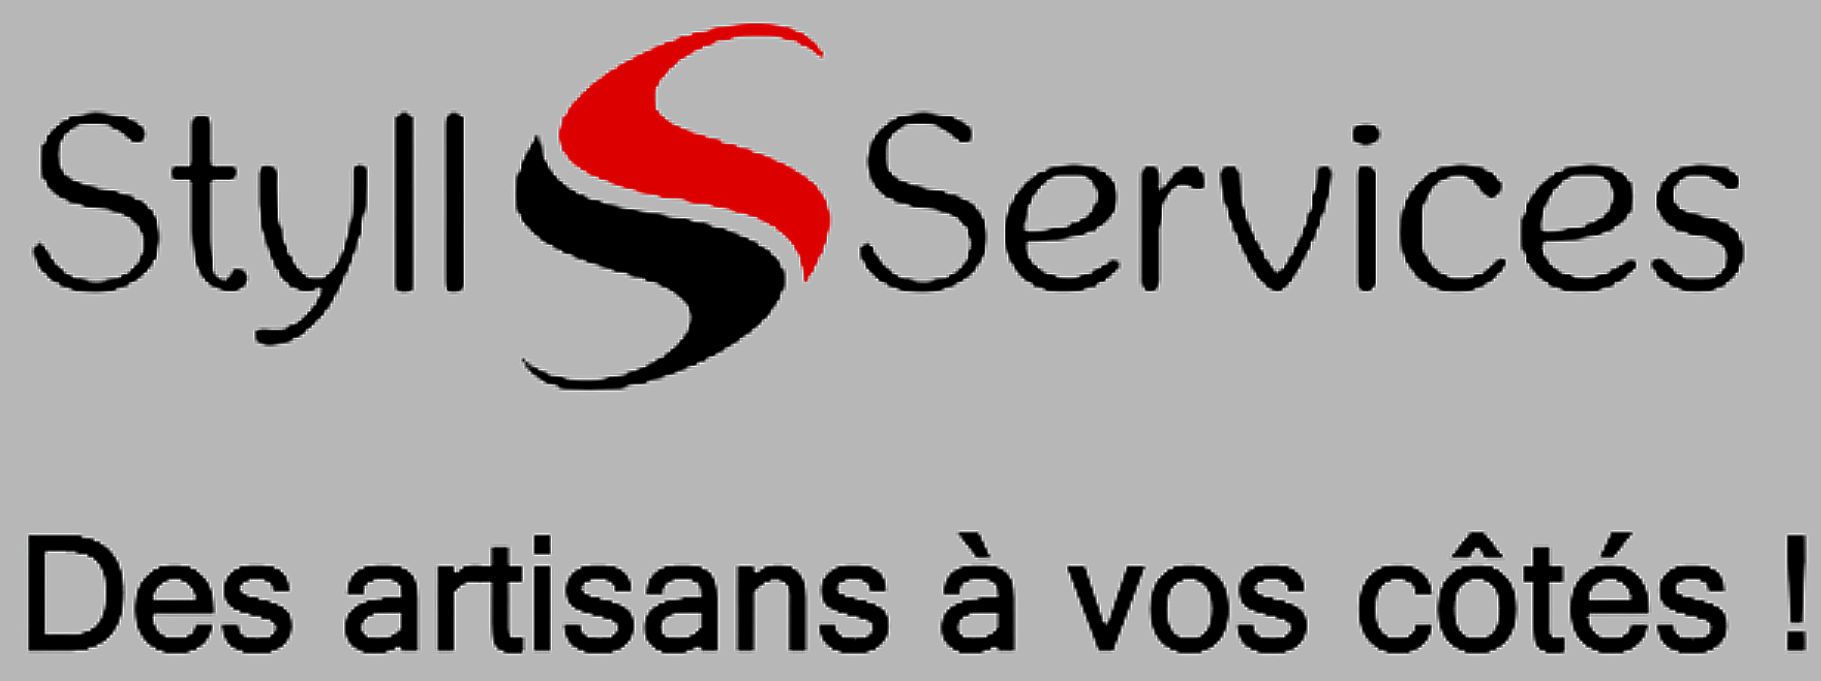 Styll Services logo